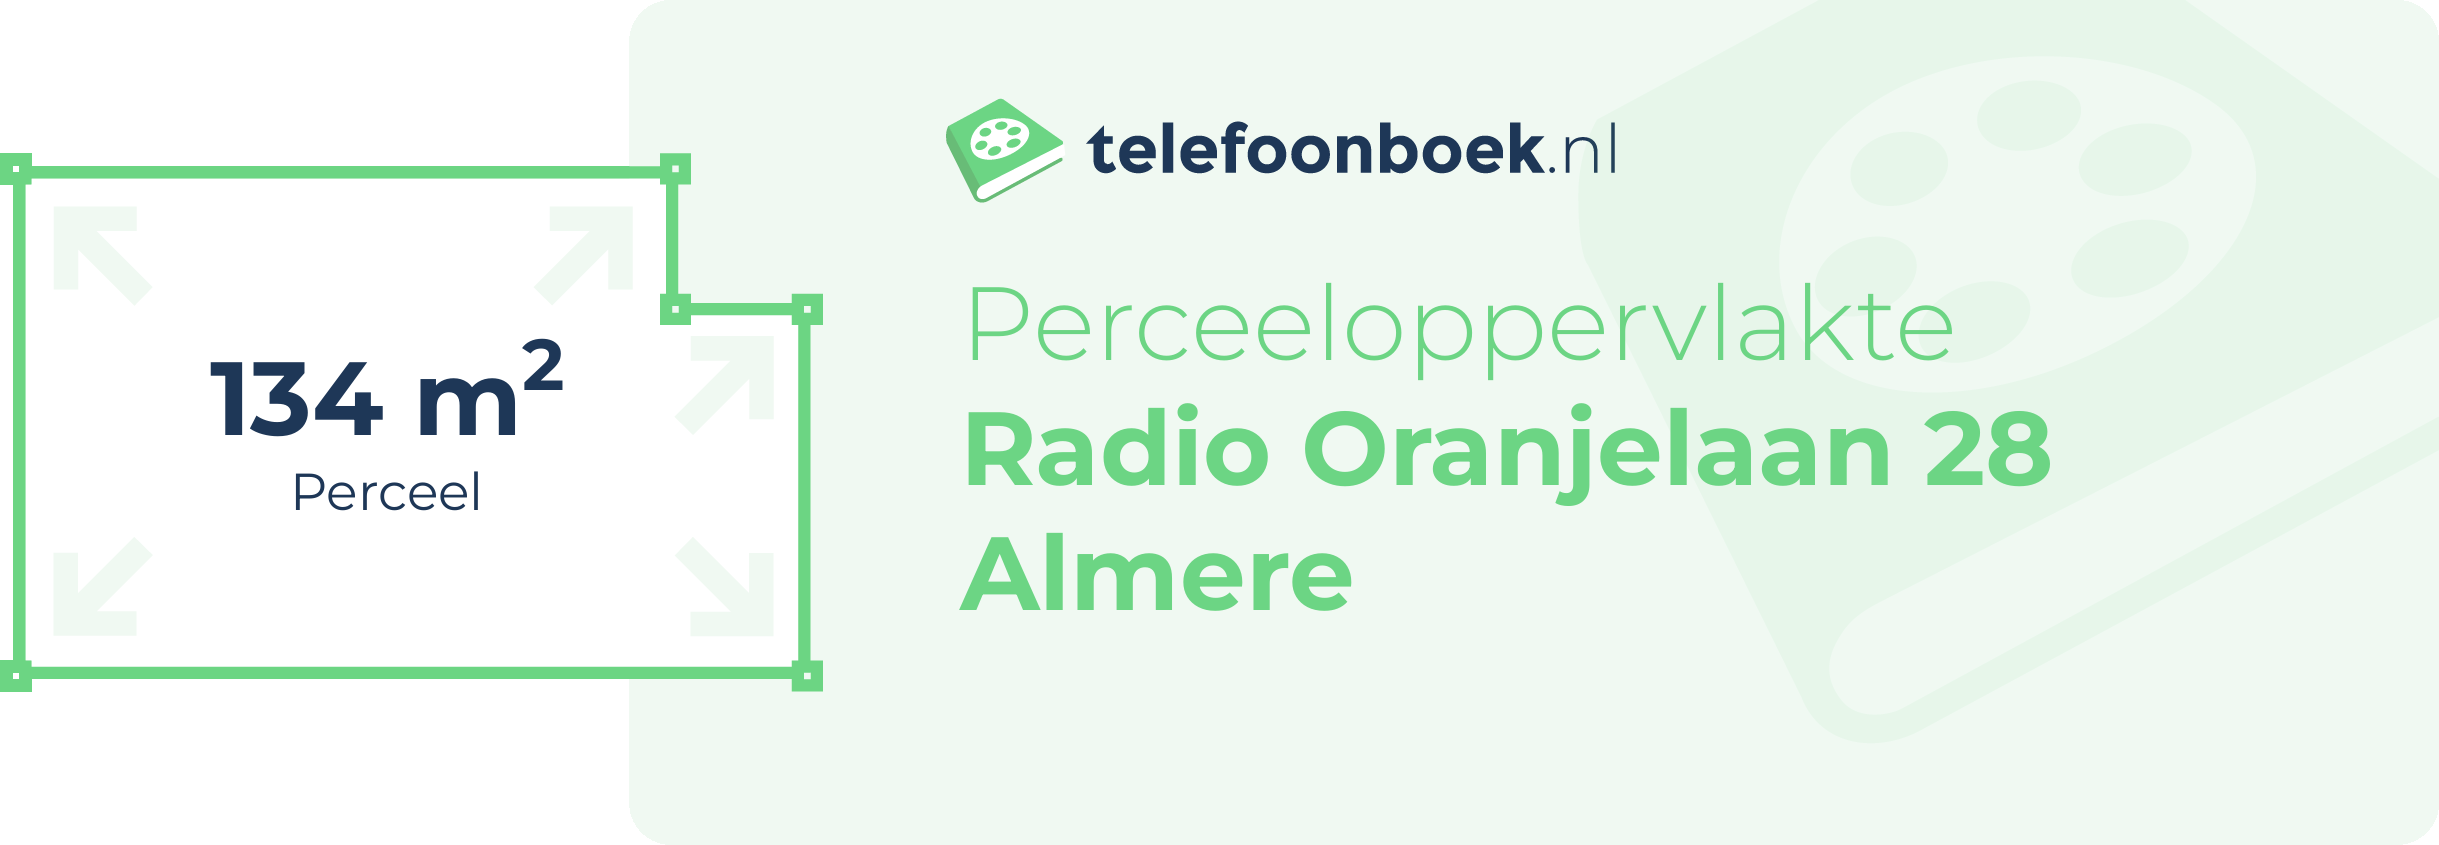 Perceeloppervlakte Radio Oranjelaan 28 Almere